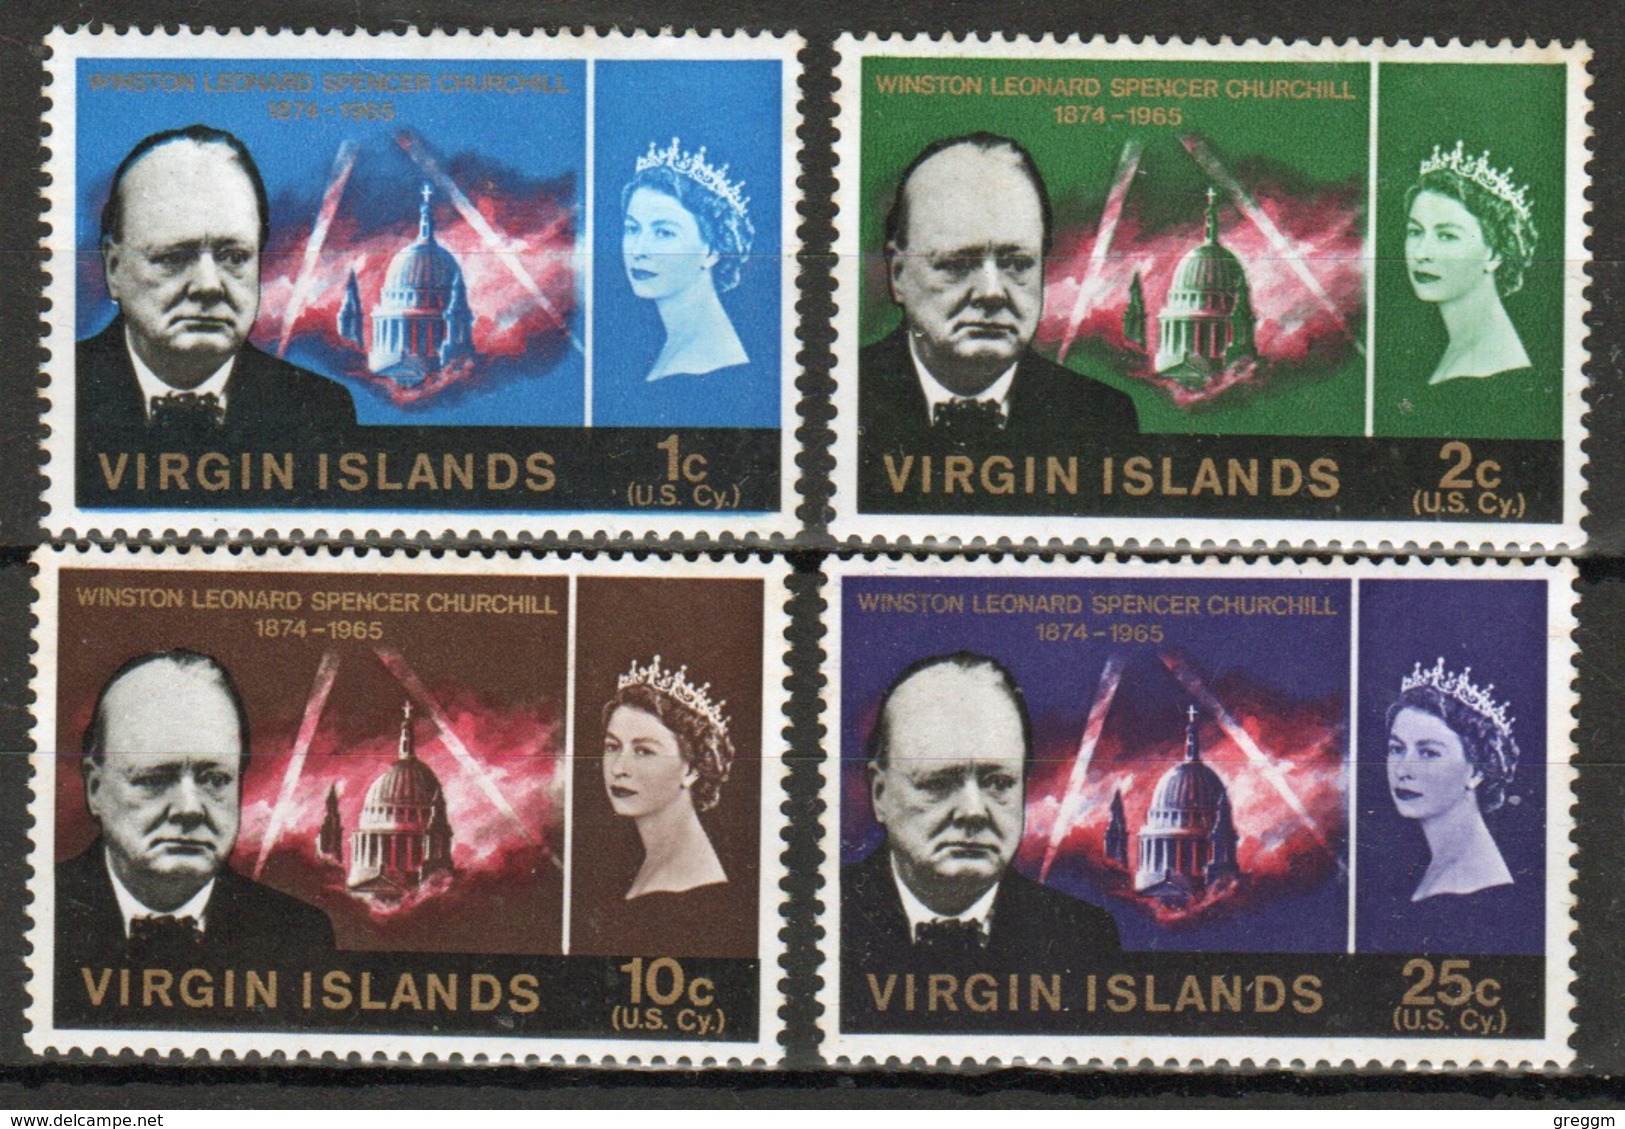 British Virgin Islands 1966 Queen Elizabeth Set Of Stamps Celebrating The Churchill Commemoration. - British Virgin Islands